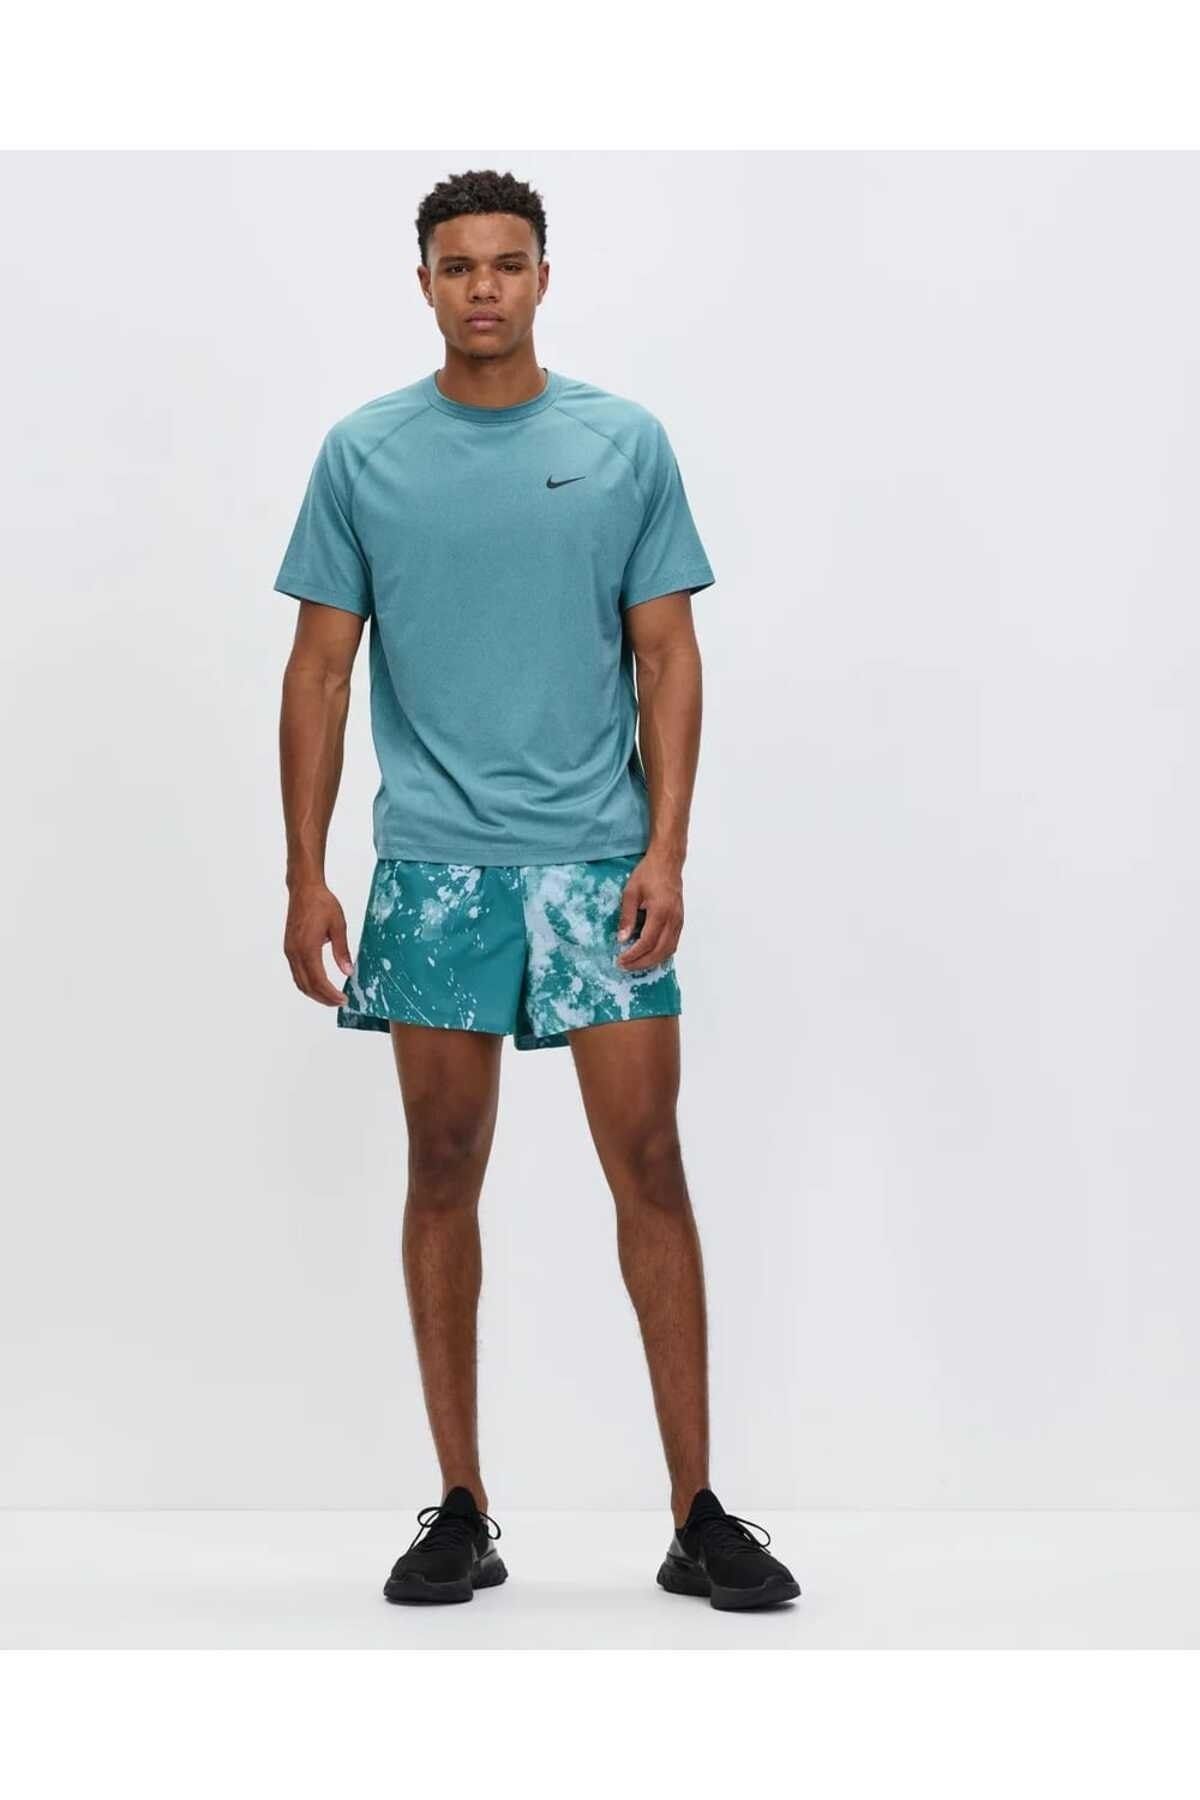 Nike Ready Men's Dri-FIT Short-Sleeve Fitness Top.